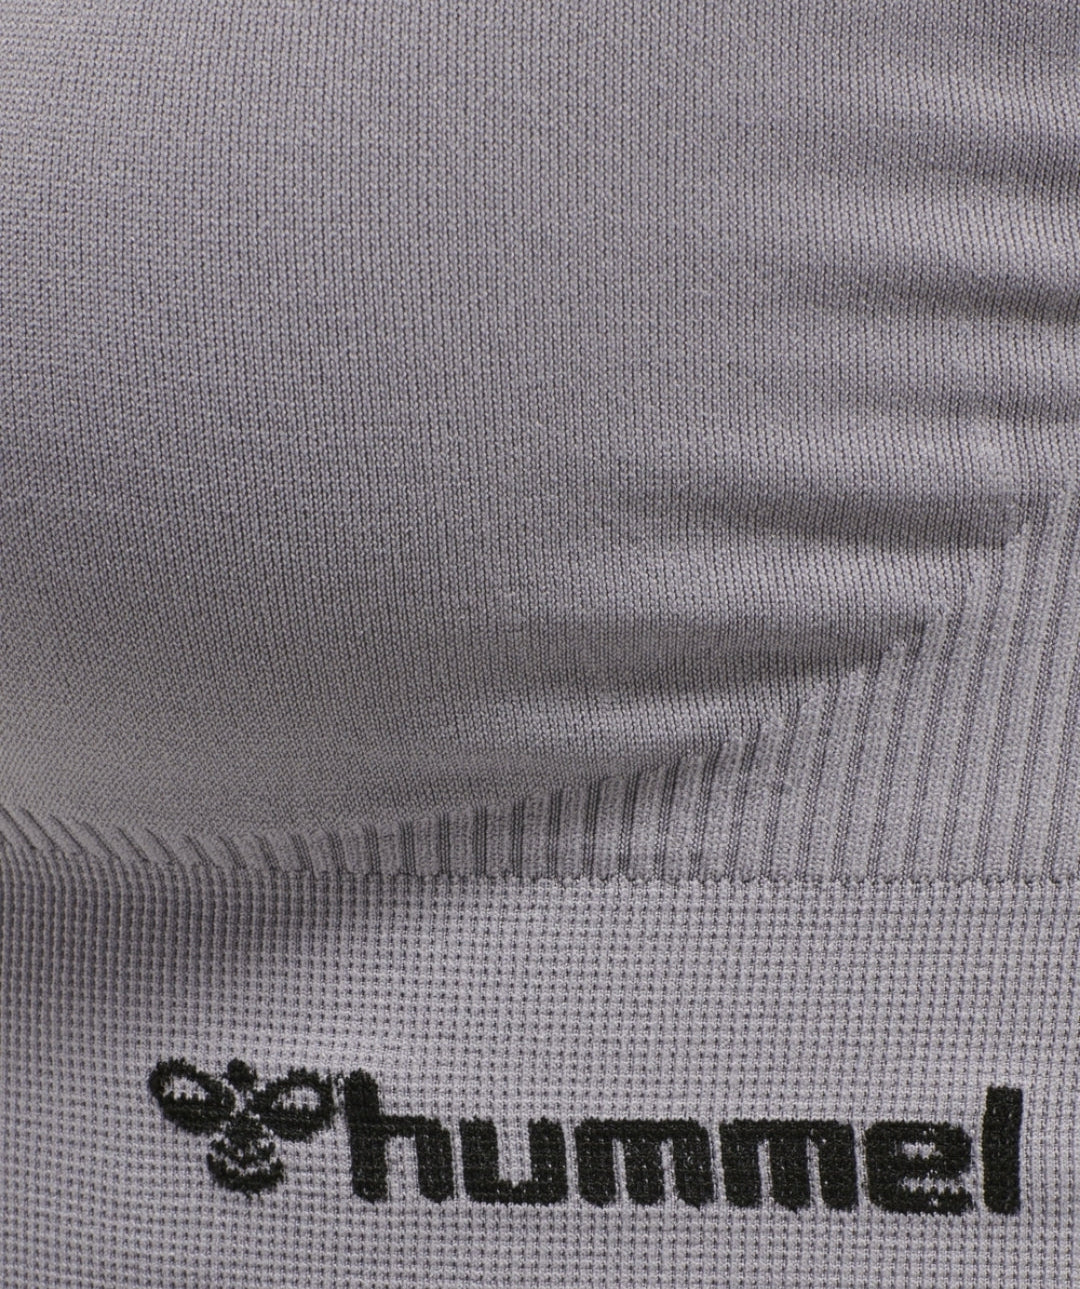 Hummel® - TIF Seamless Sportsbh (Minimal Gray)